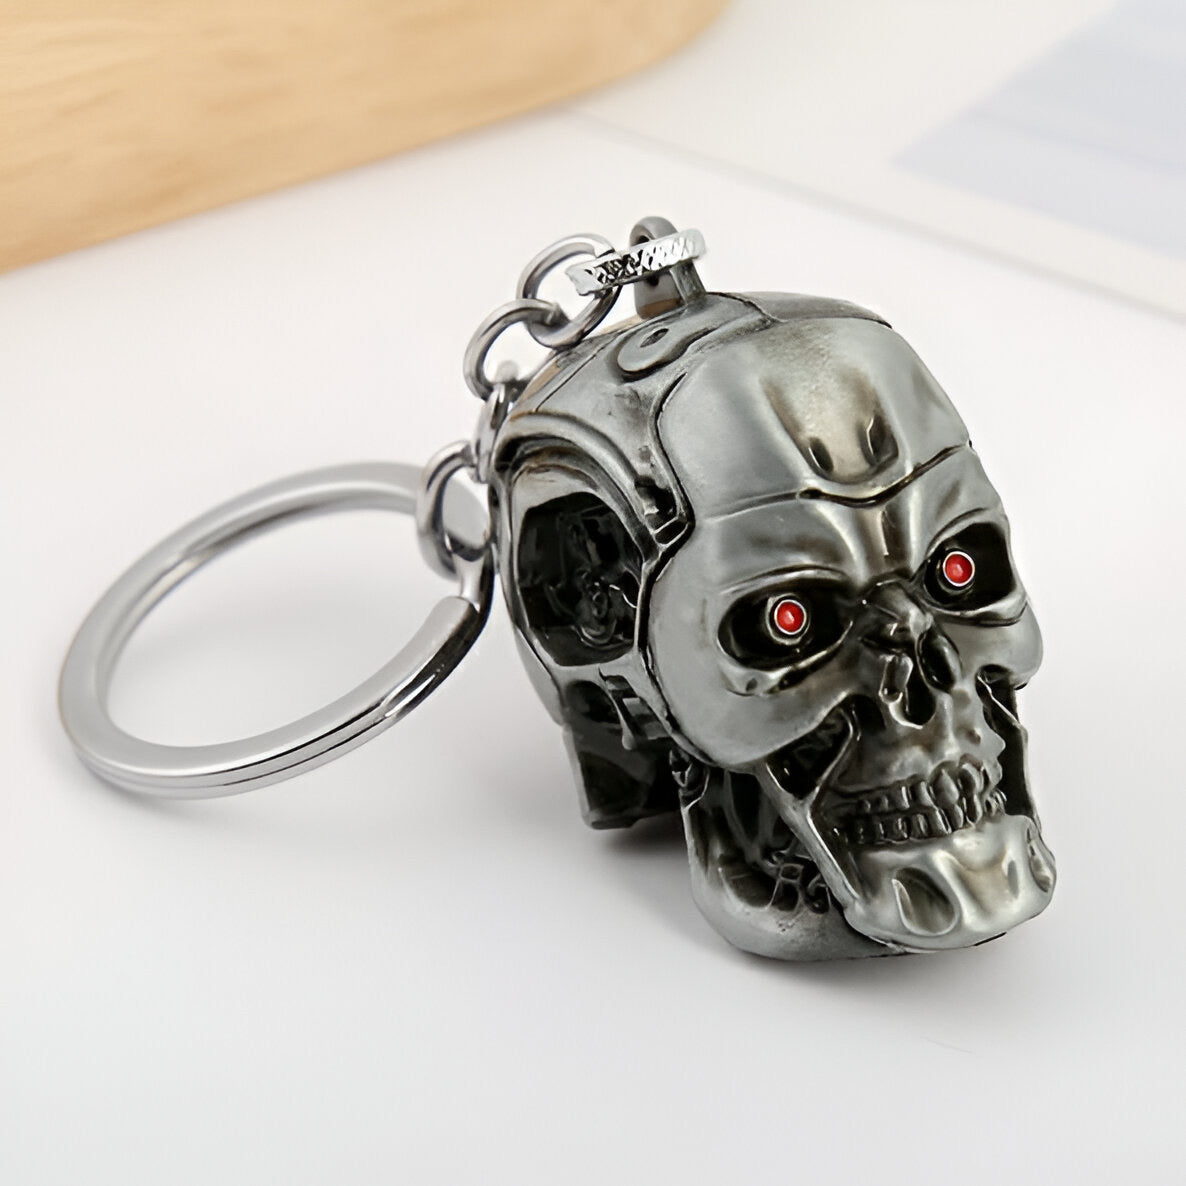 Terminator Keychain